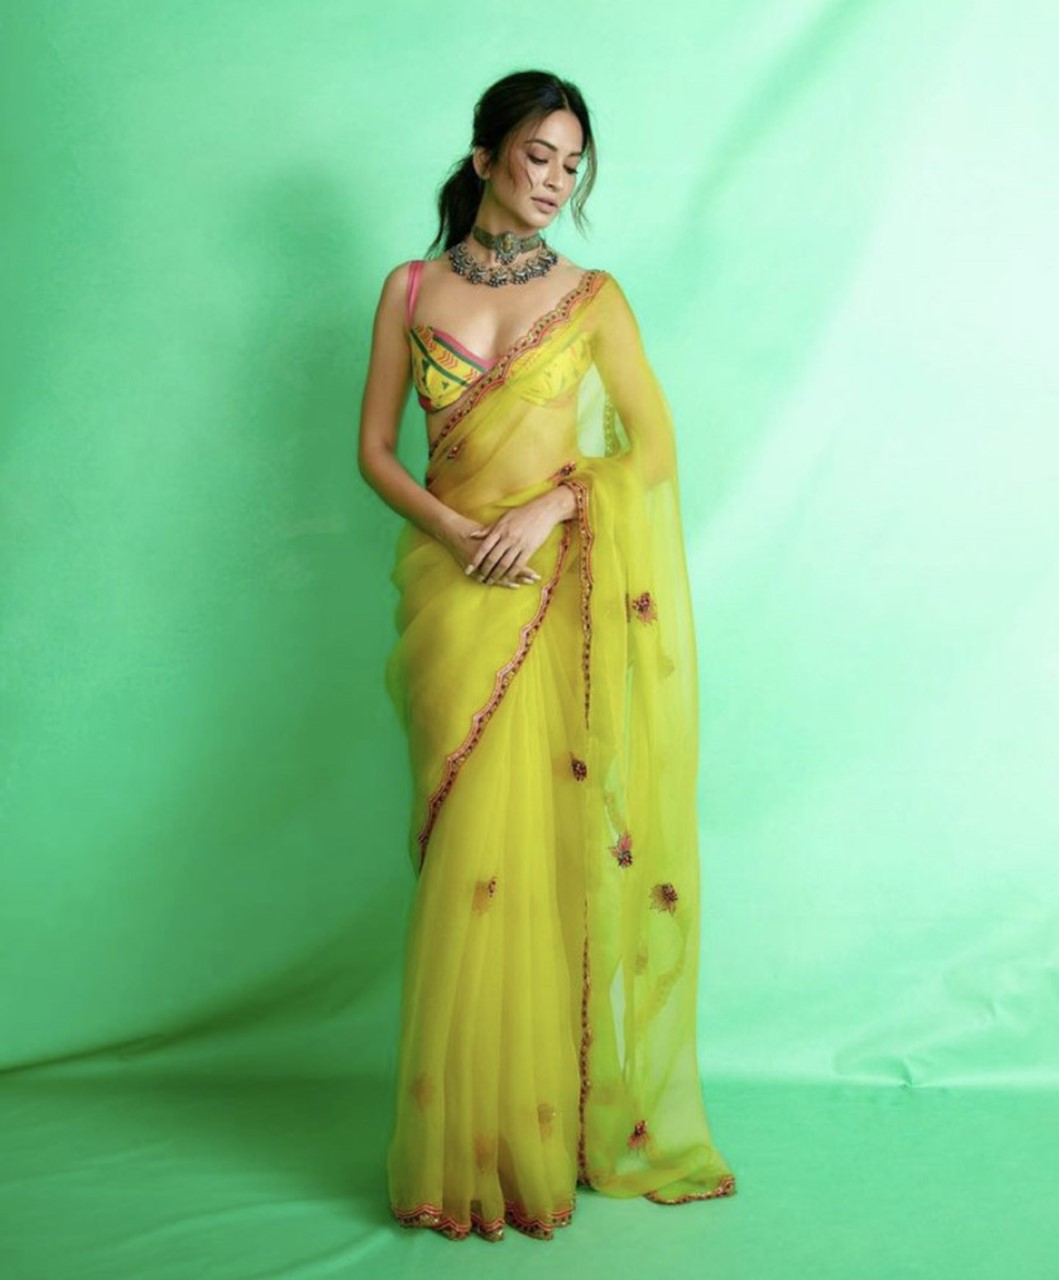 Kriti Kharbanda in a stunning yellow saree is redefining summer ethnic fashion